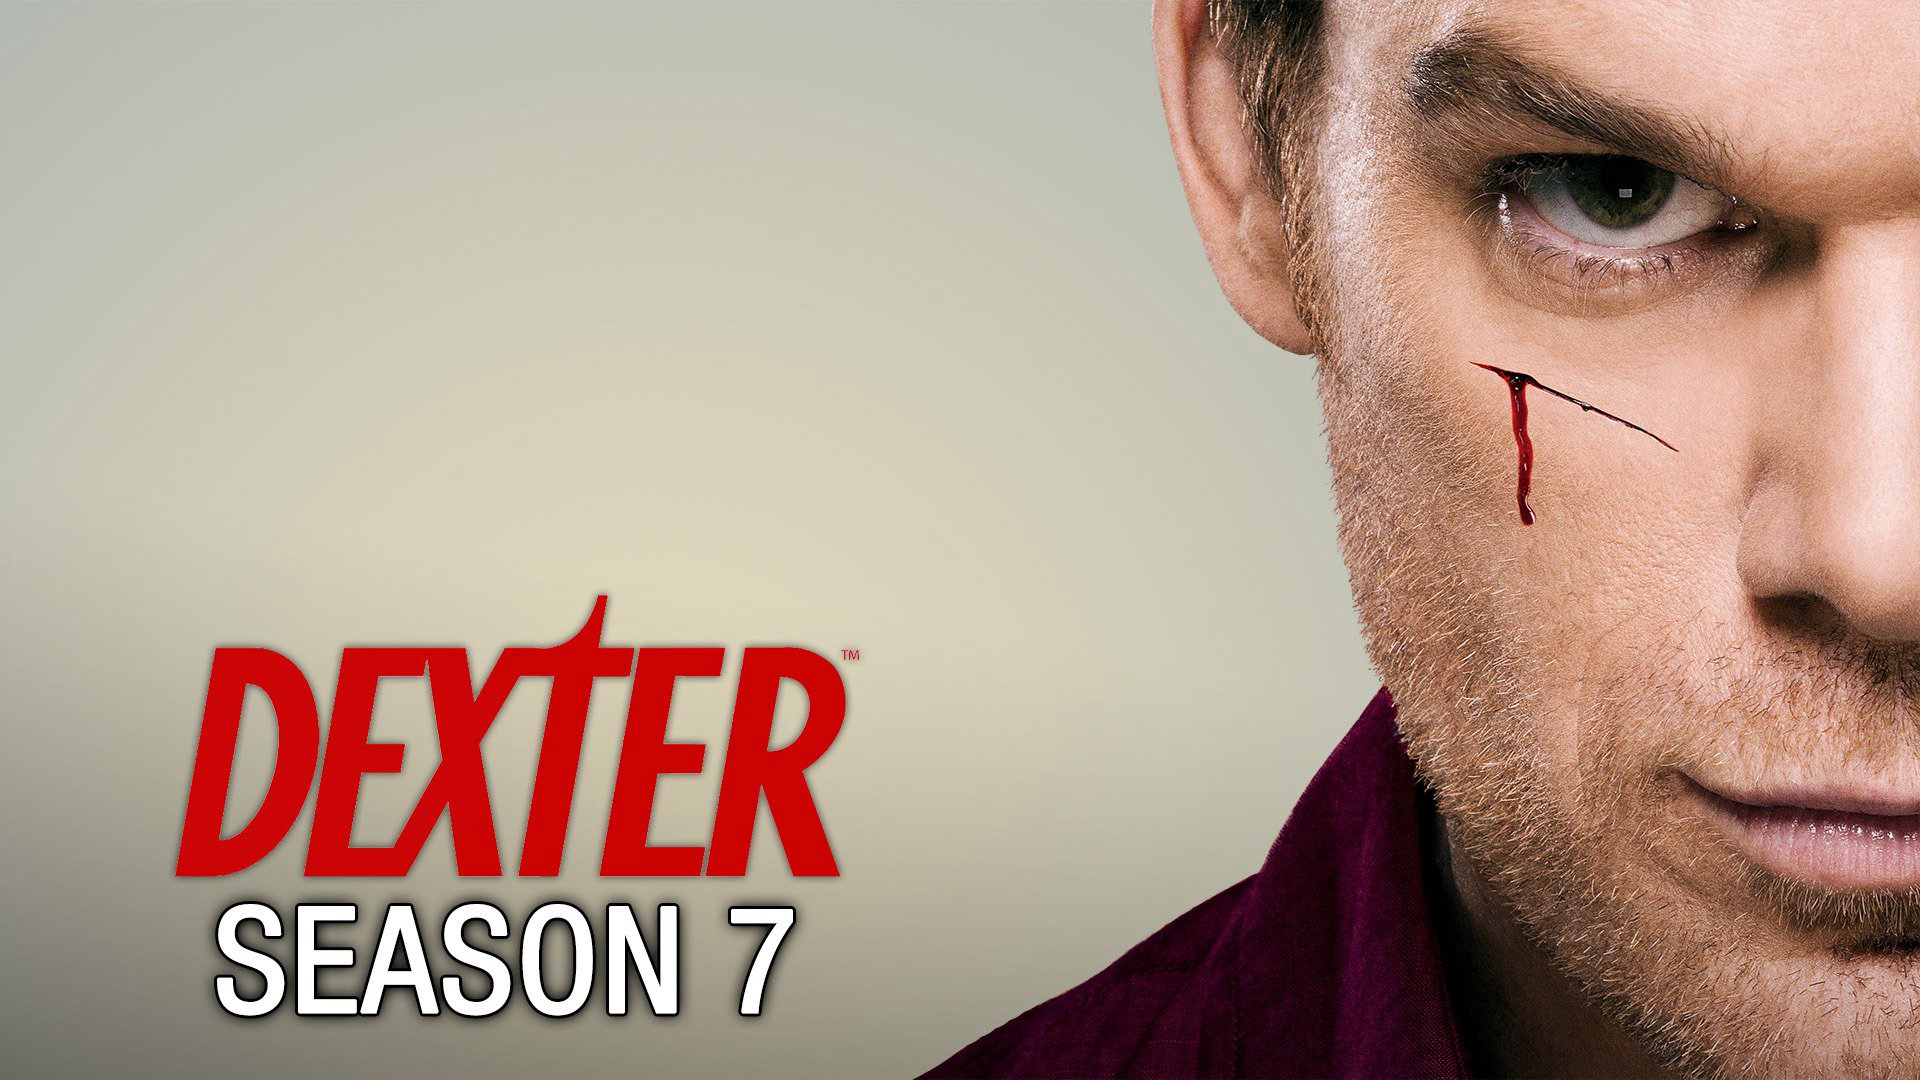 Thiên Thần Khát Máu (Phần 7) - Dexter (Season 7) (2012)